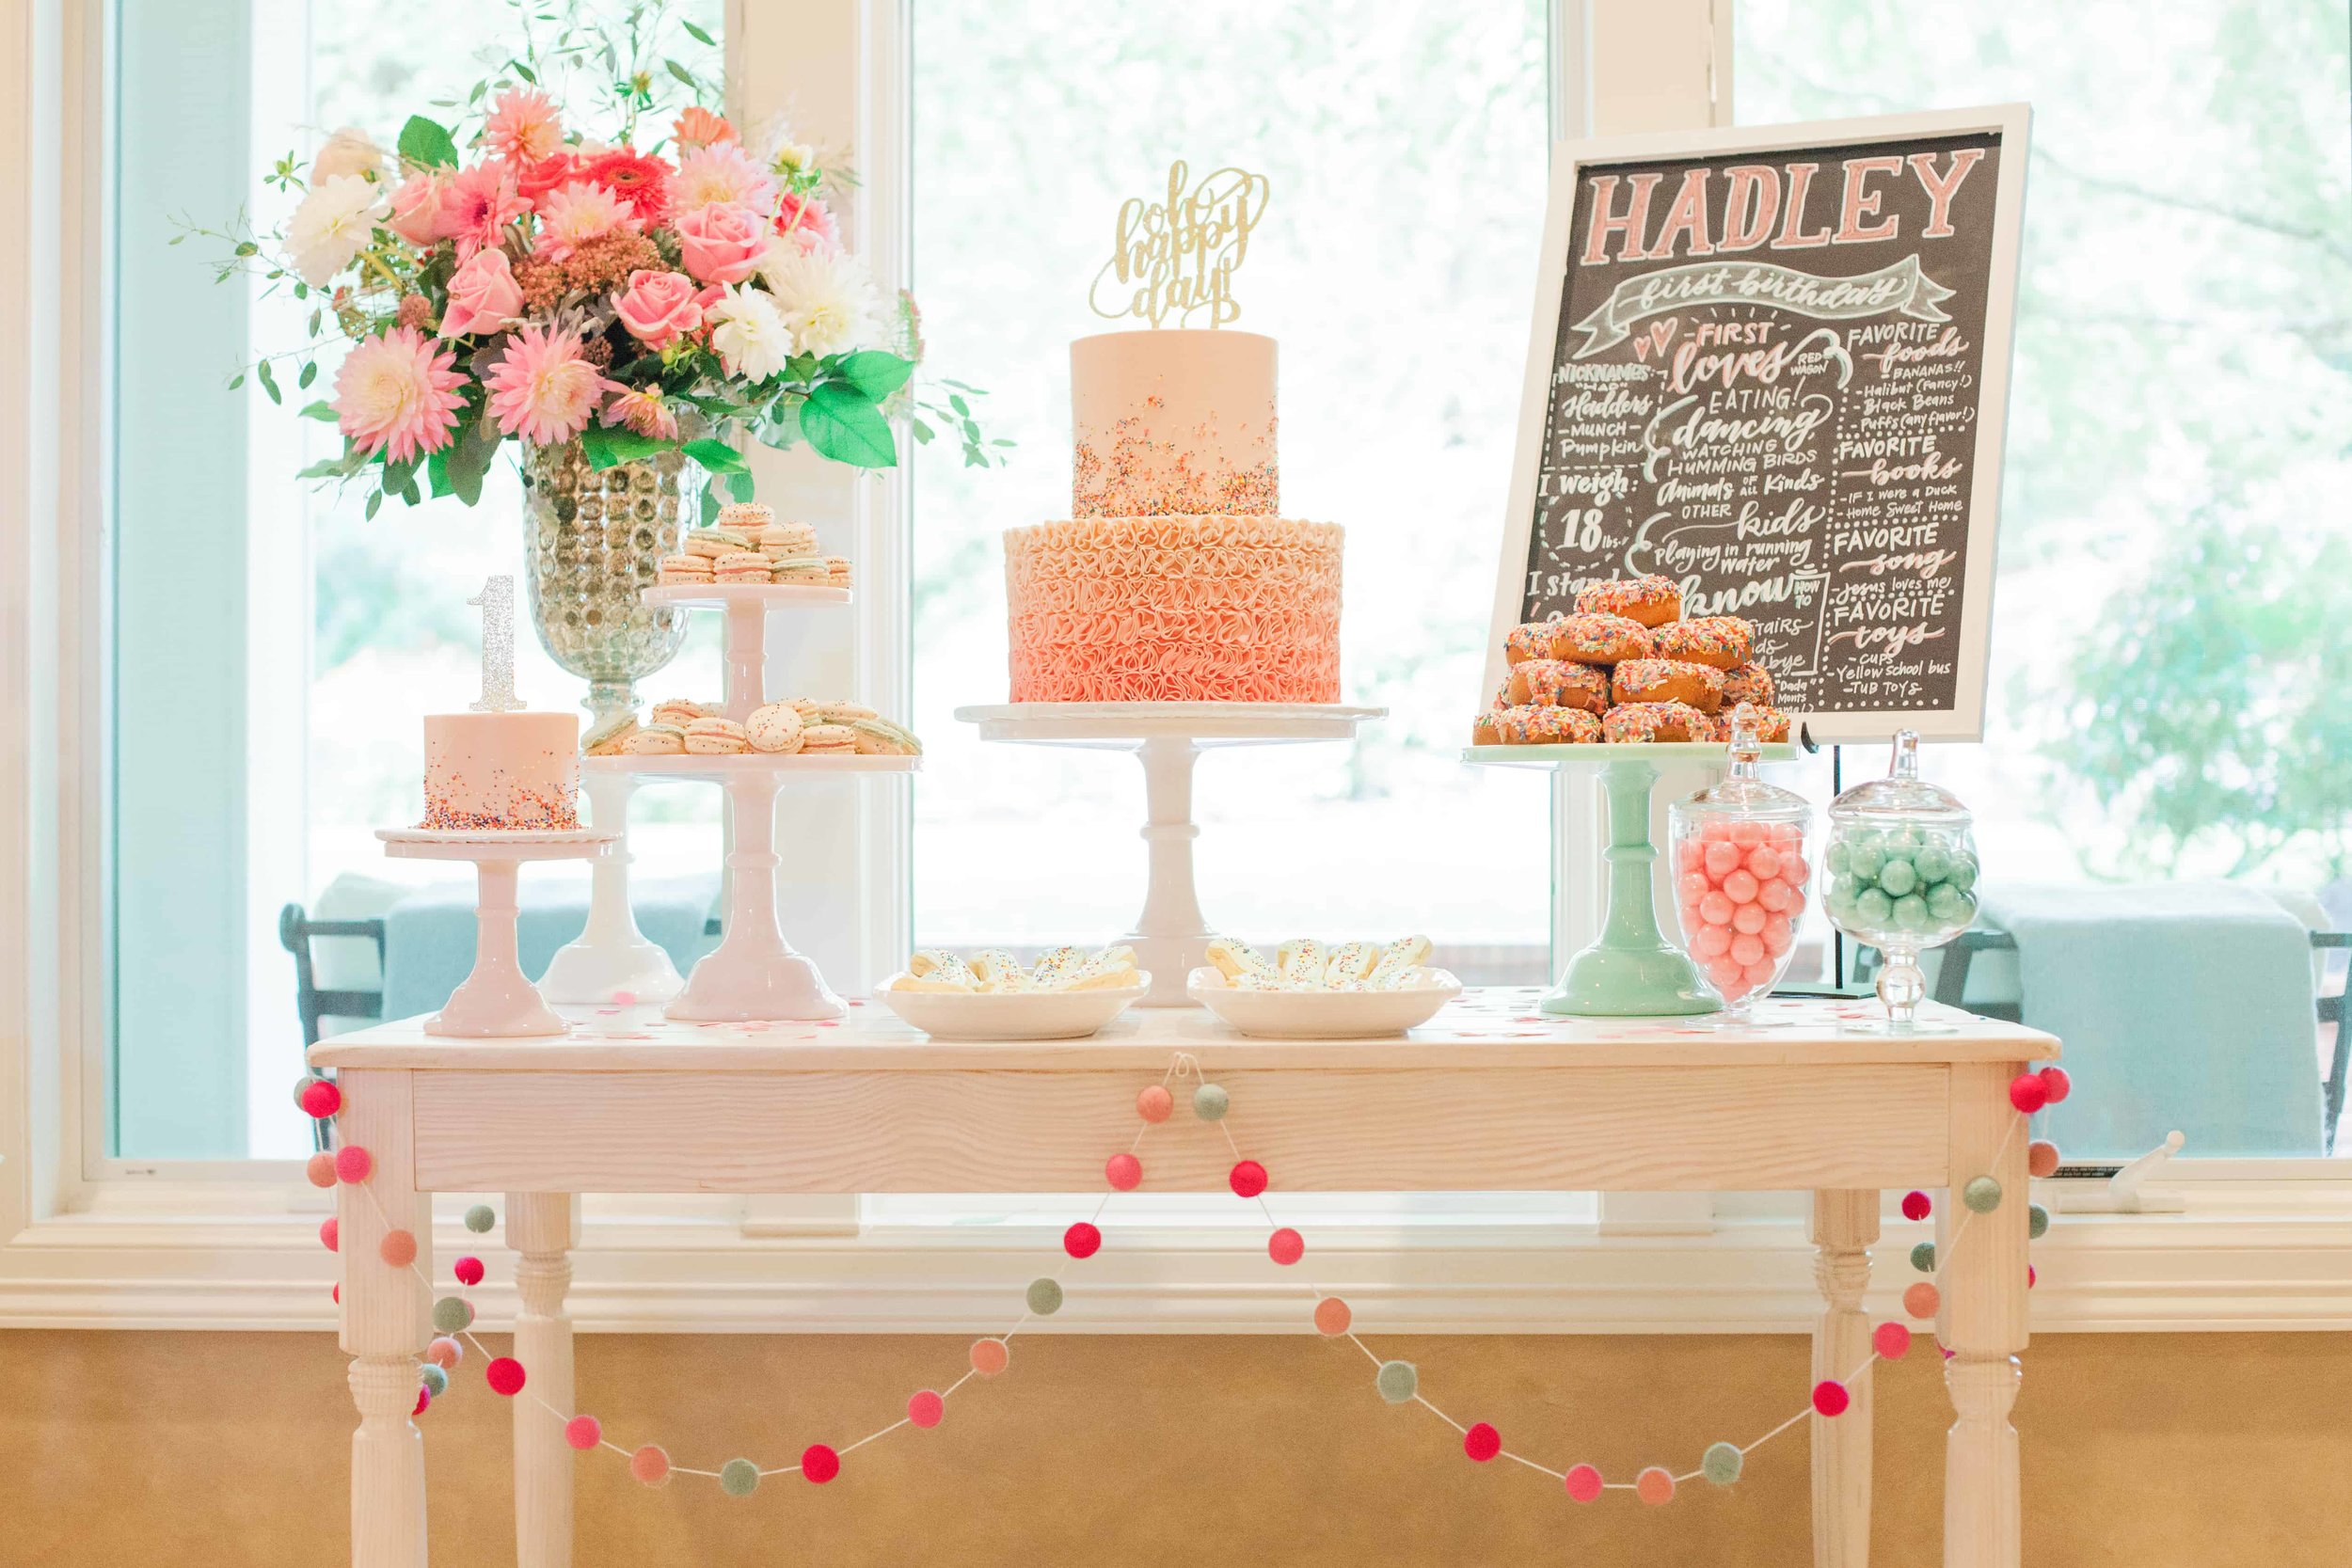 Hadley-First-Birthday-Cake-Table.jpg